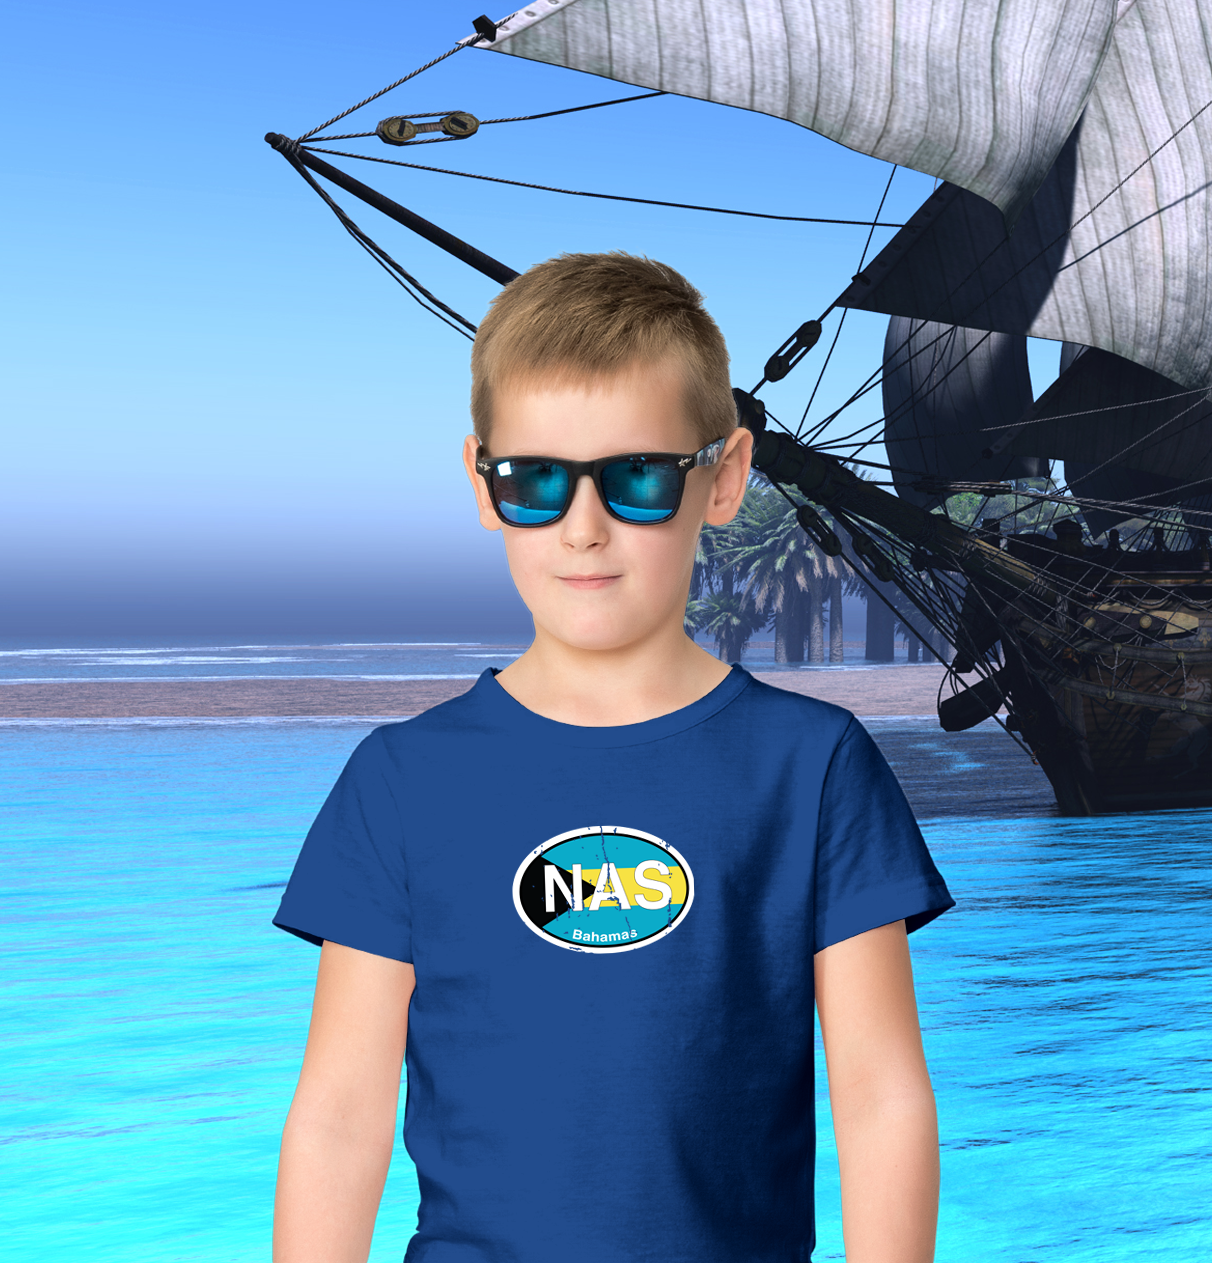 Nassau Flag Youth T-Shirt - My Destination Location